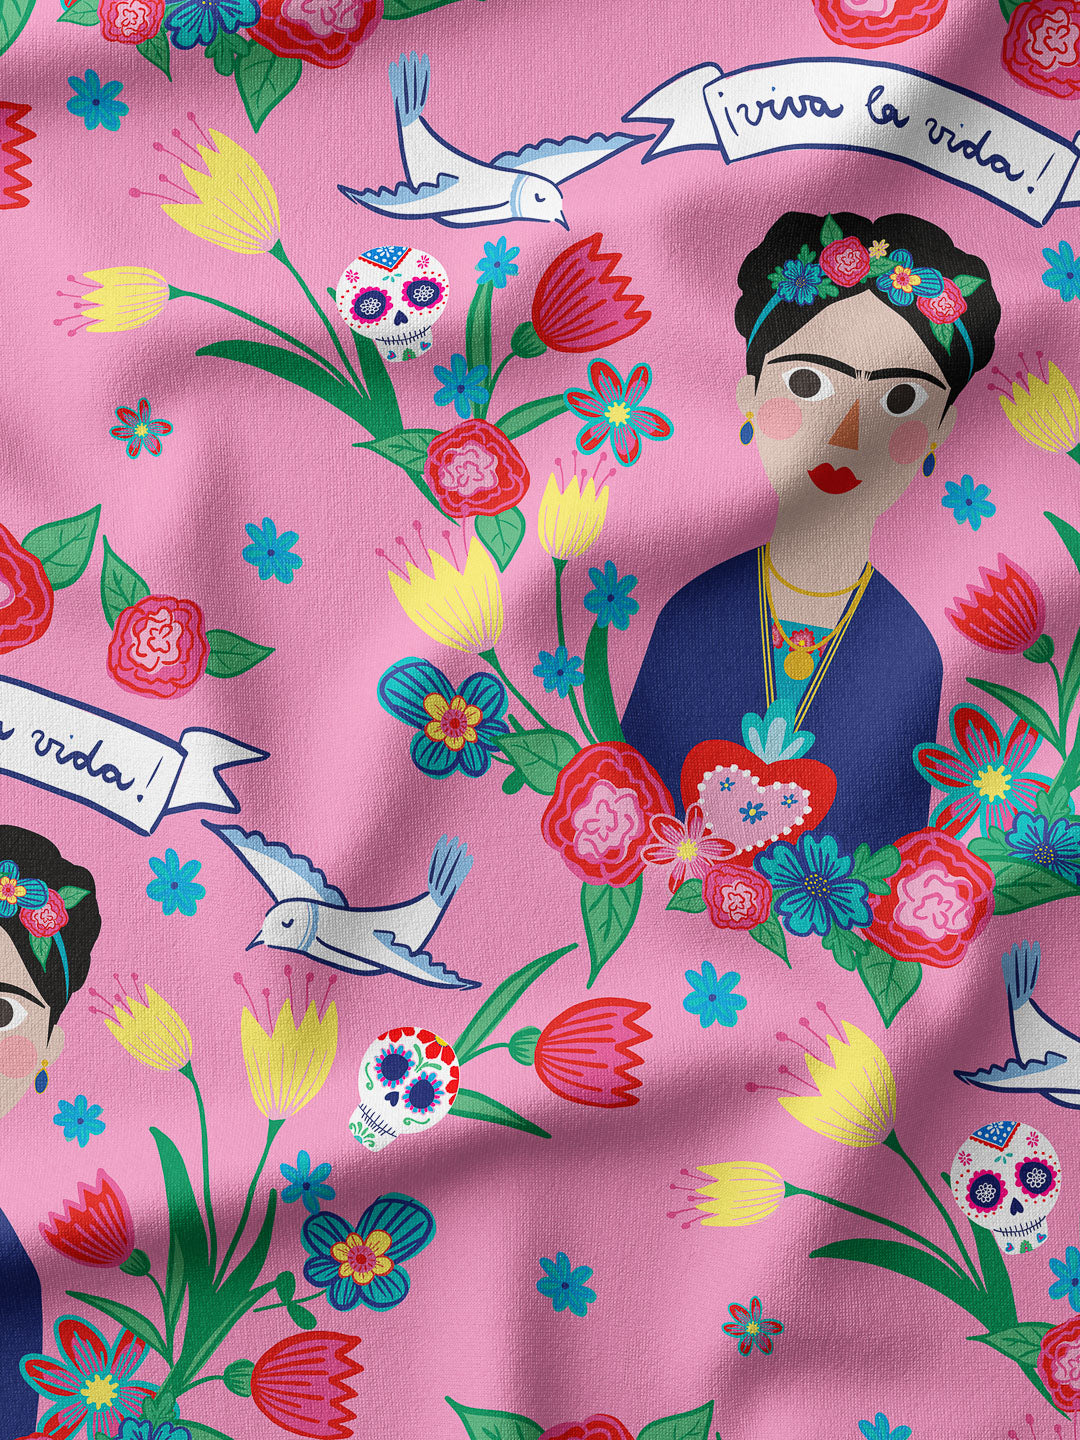 J&J French Terry Frida Kahlo Viva La Vida rosa extrabreit